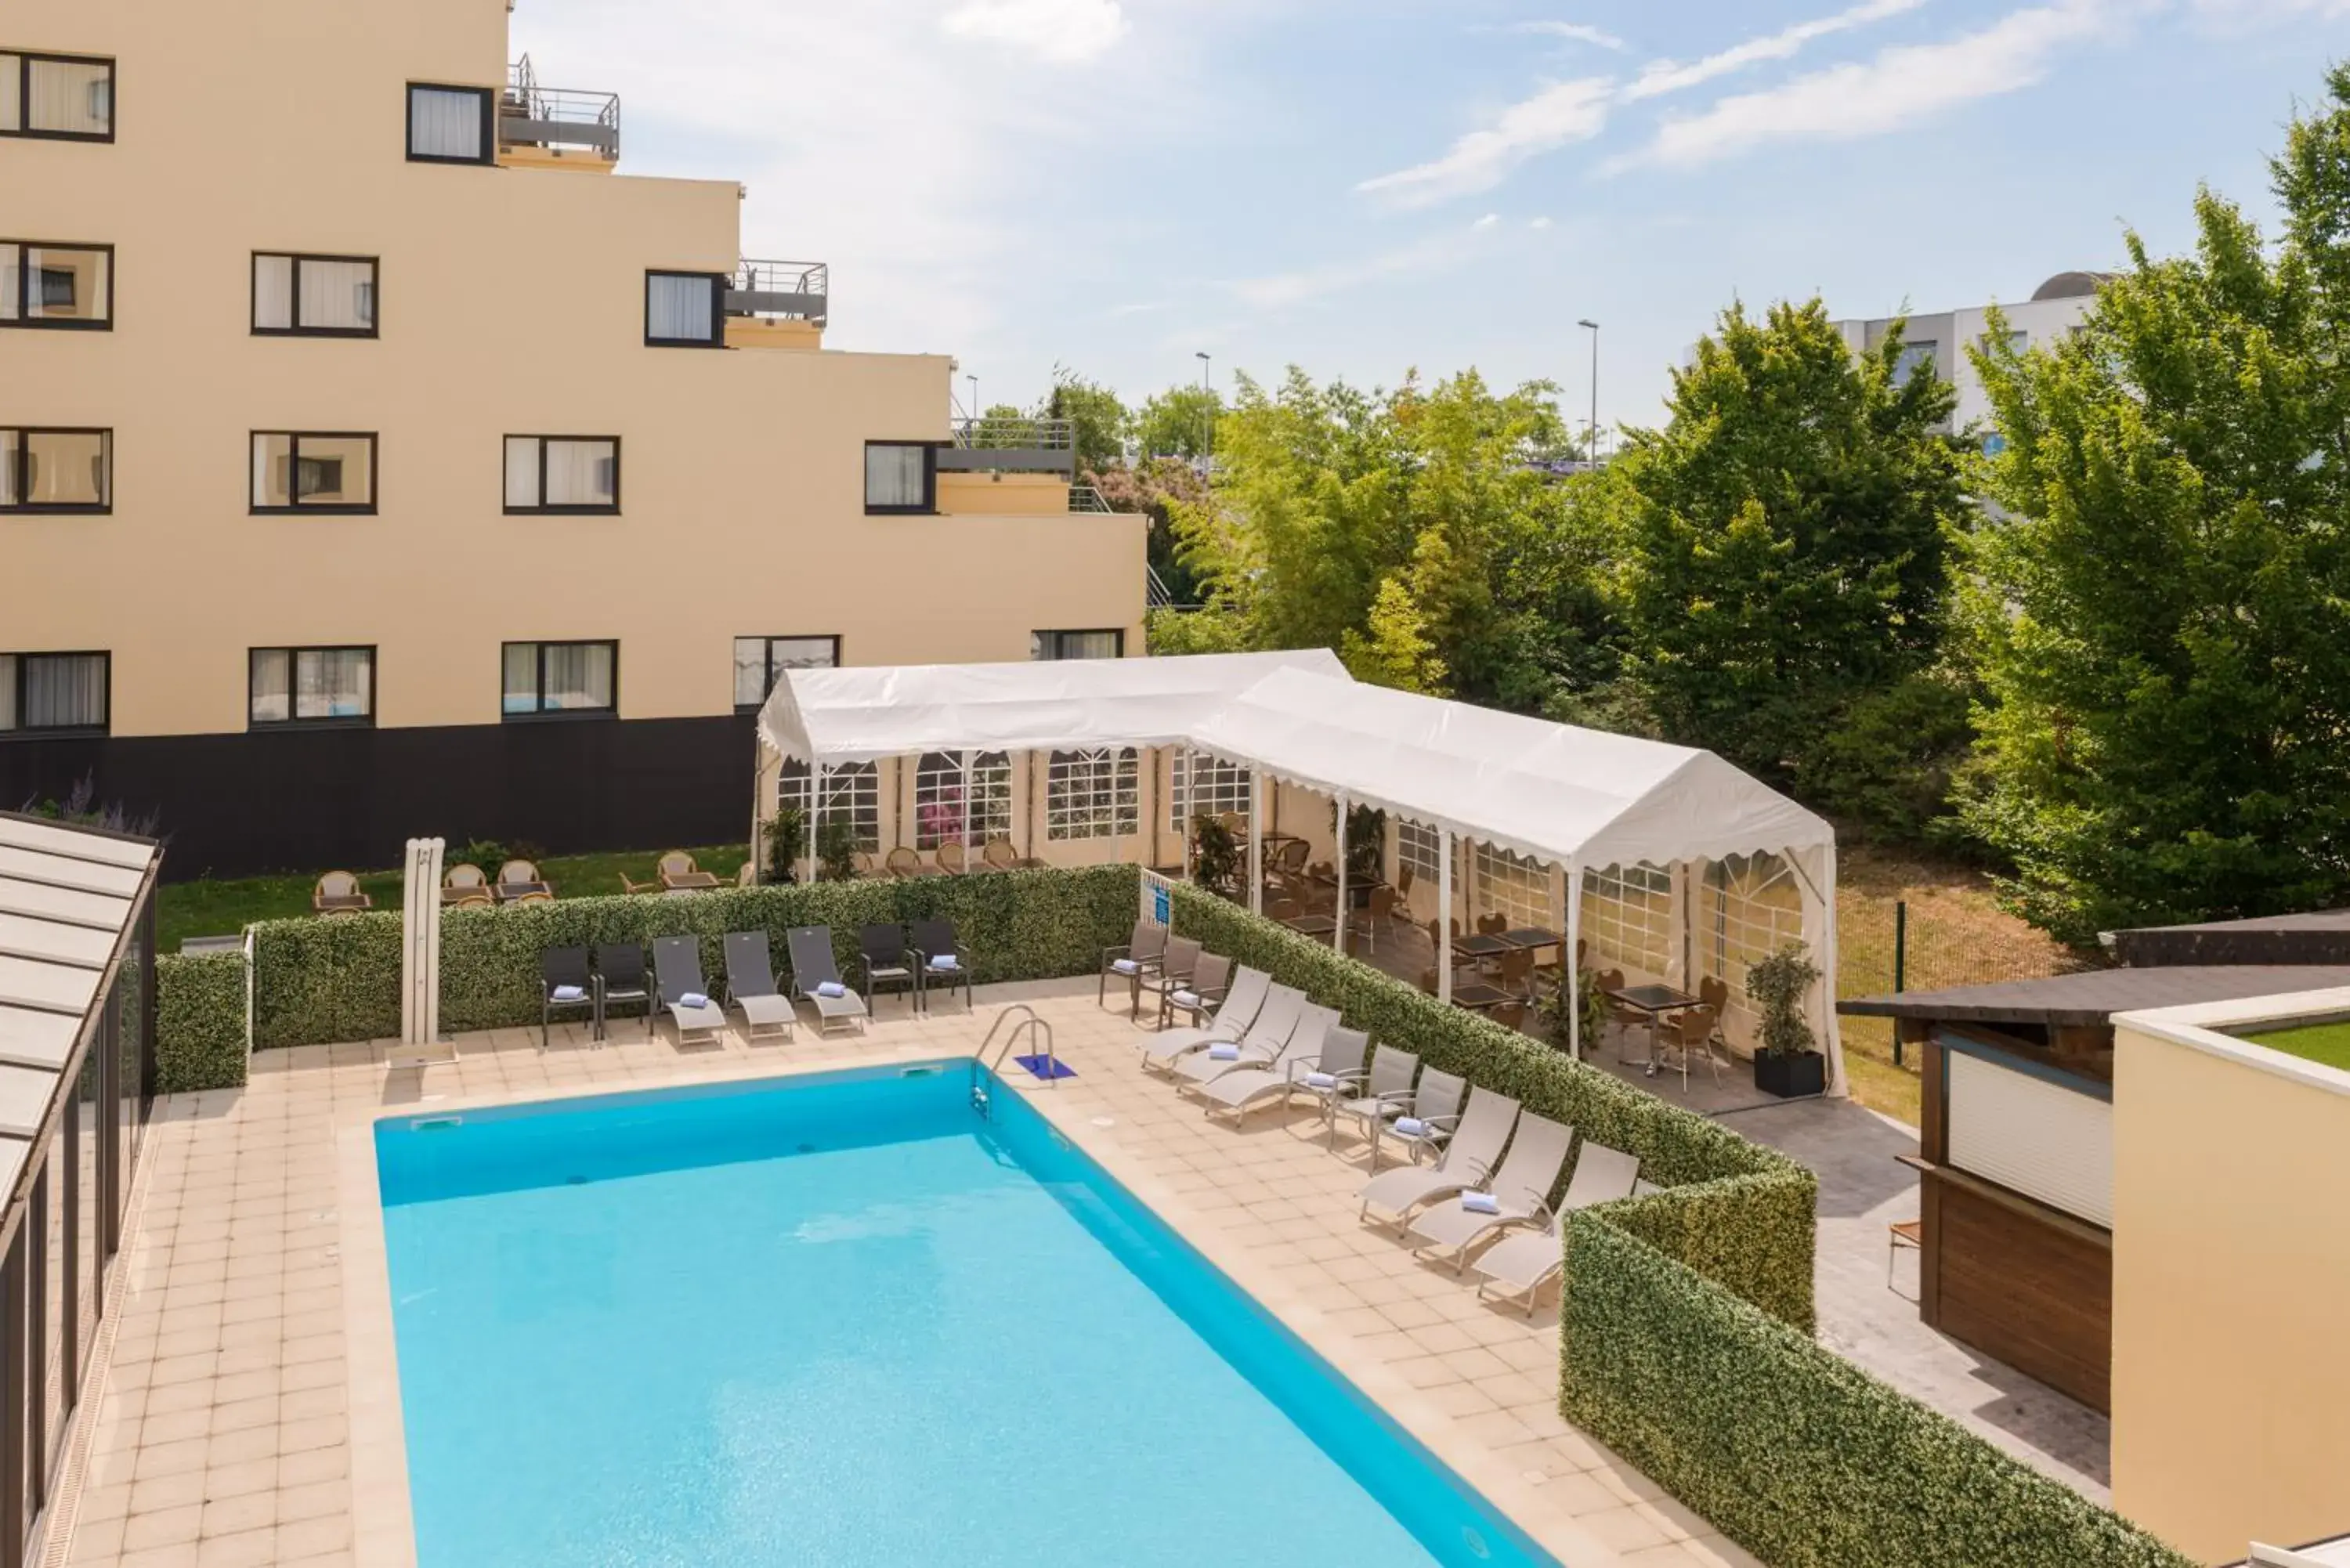 Swimming pool, Pool View in The Originals City, Hotel Alteora, Poitiers Site du Futuroscope (Inter-Hotel)